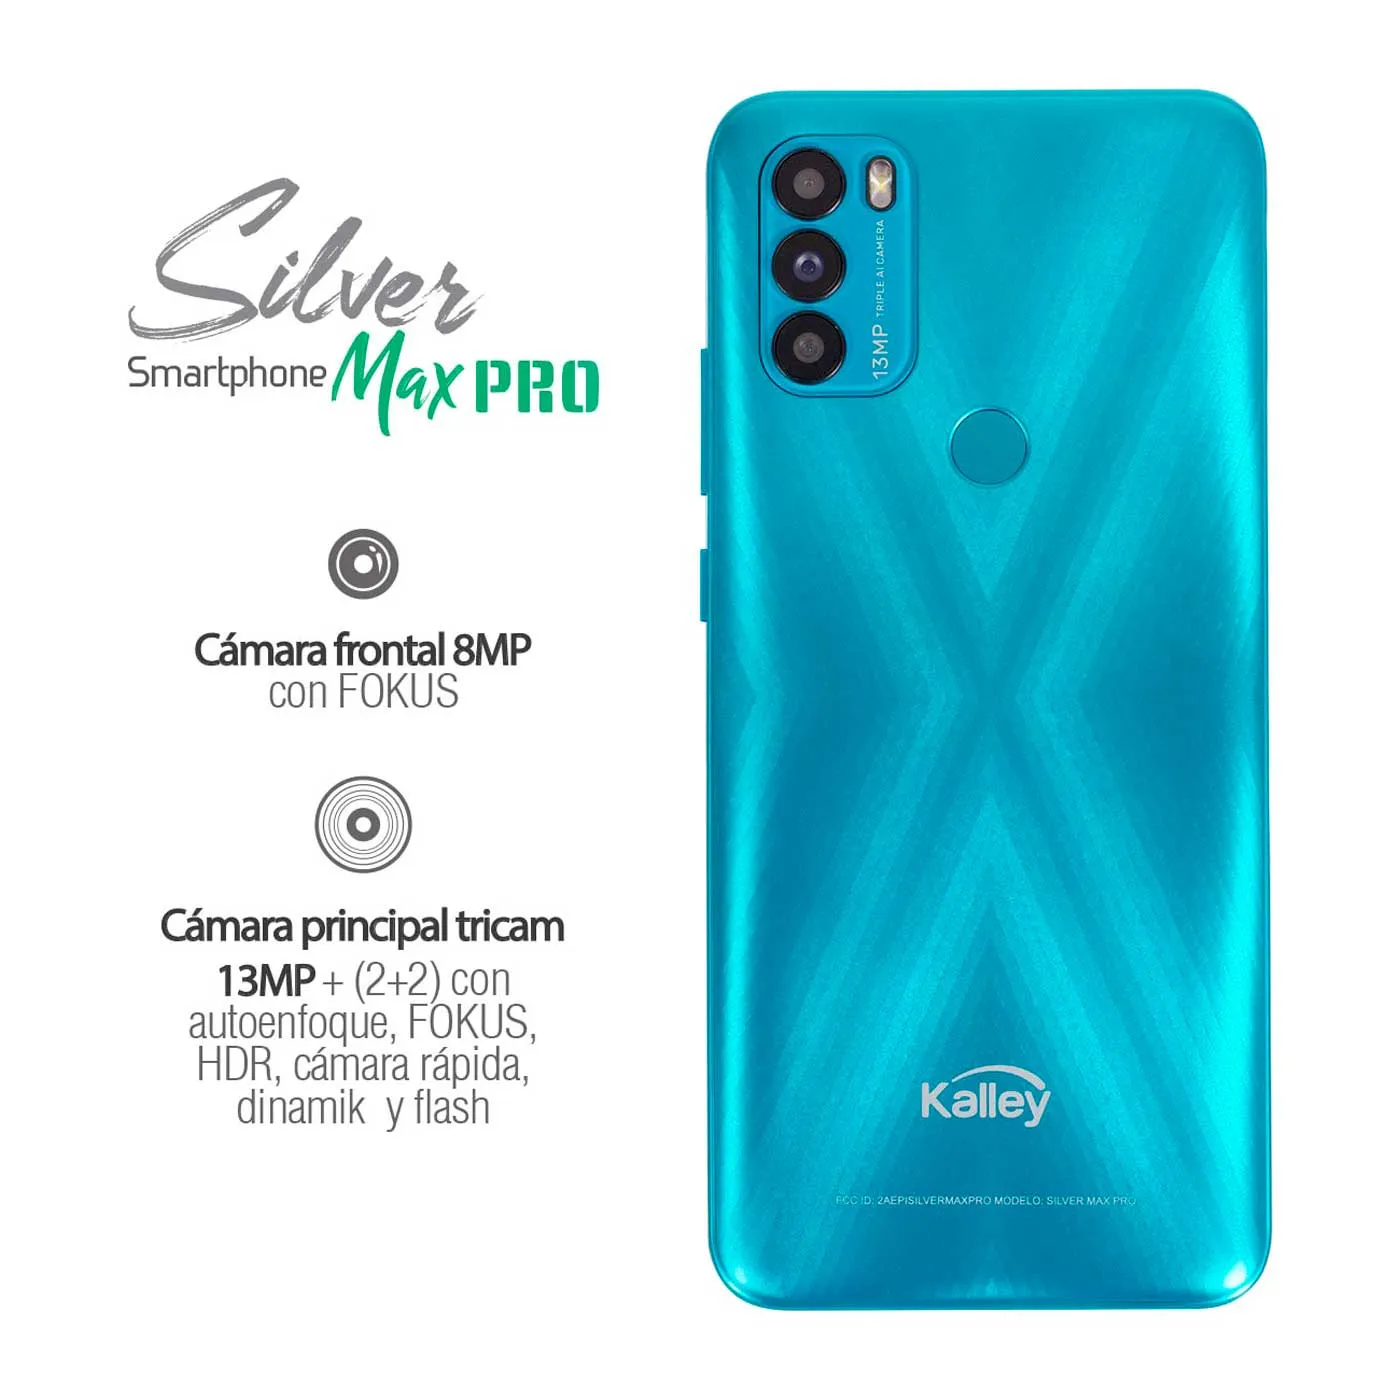 Celular Kalley Silver Max PRO 3+32GB Verde